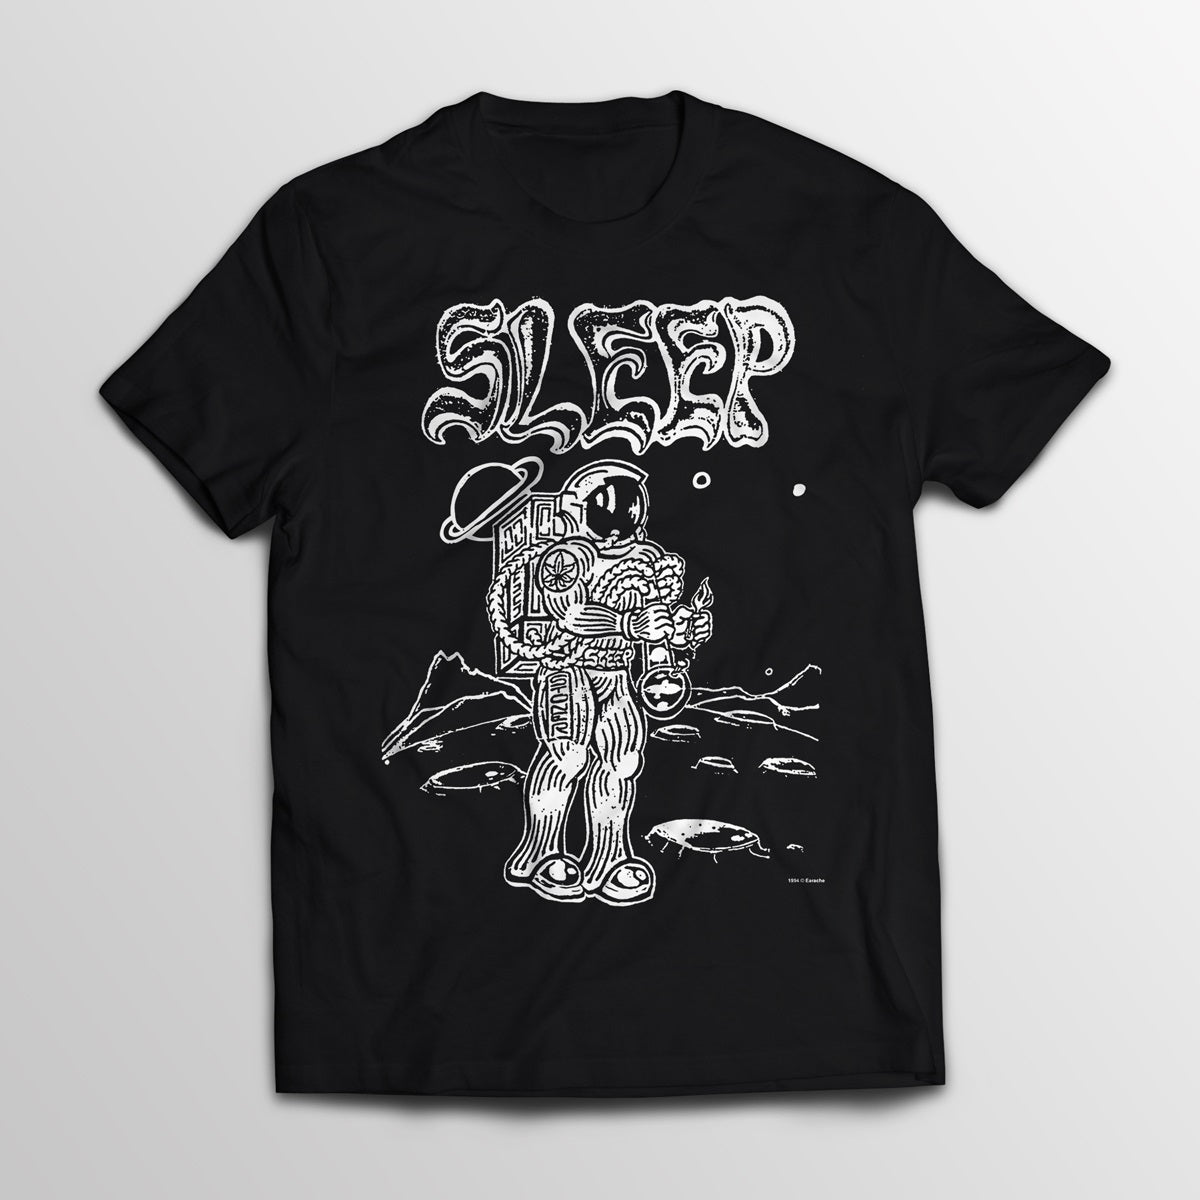 Sleep "Astronaut" T-shirt